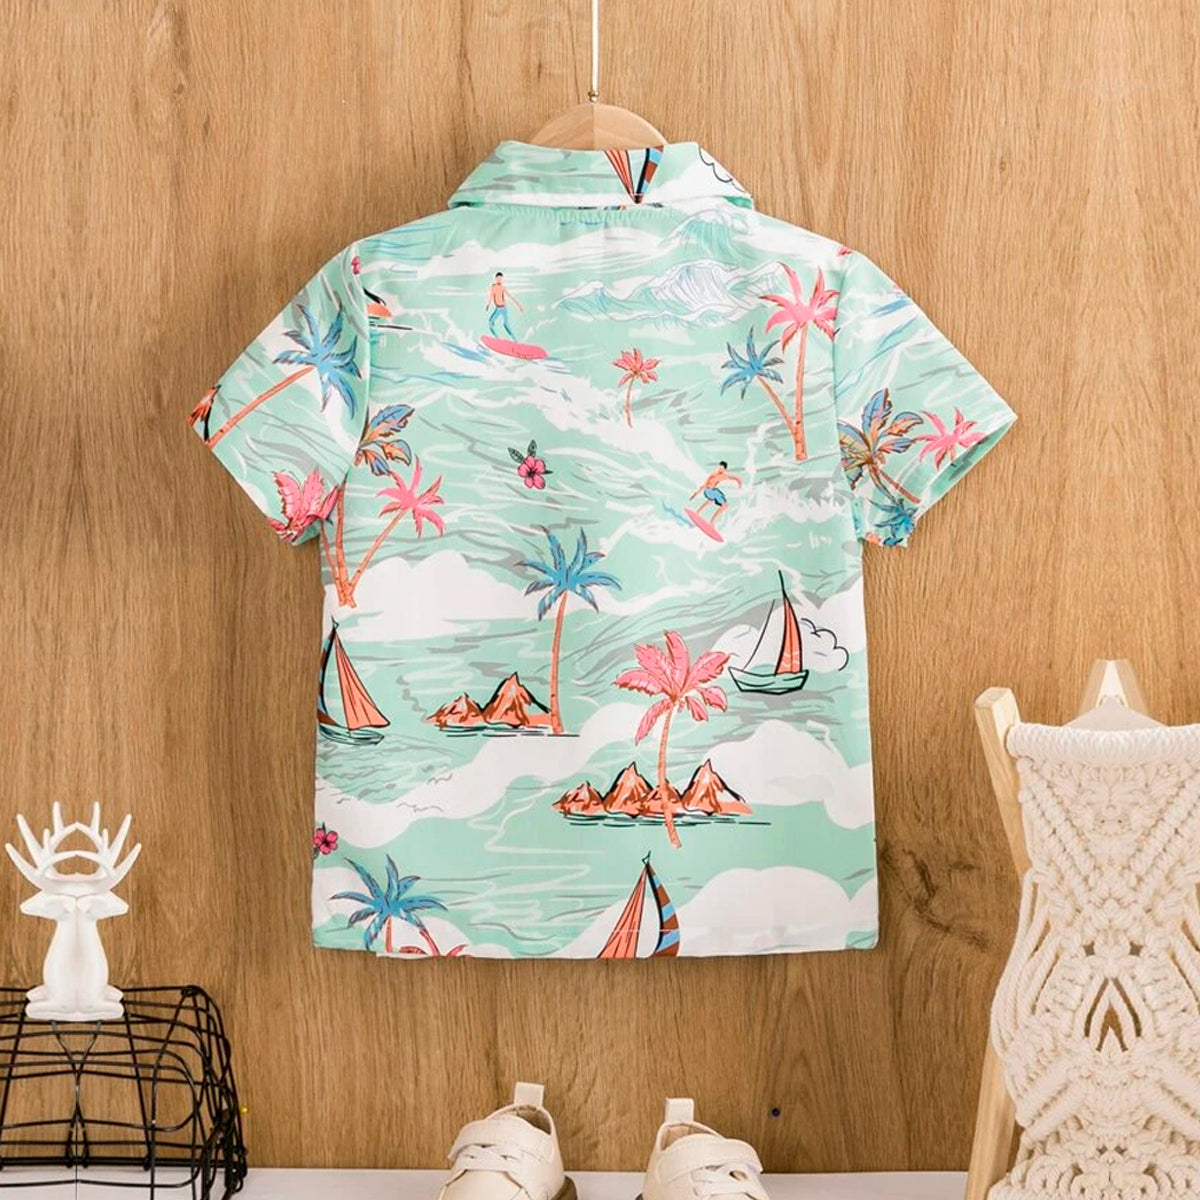 Venutaloza Boy's Sailboat Tree Designer Button Front Shirt For Boy.